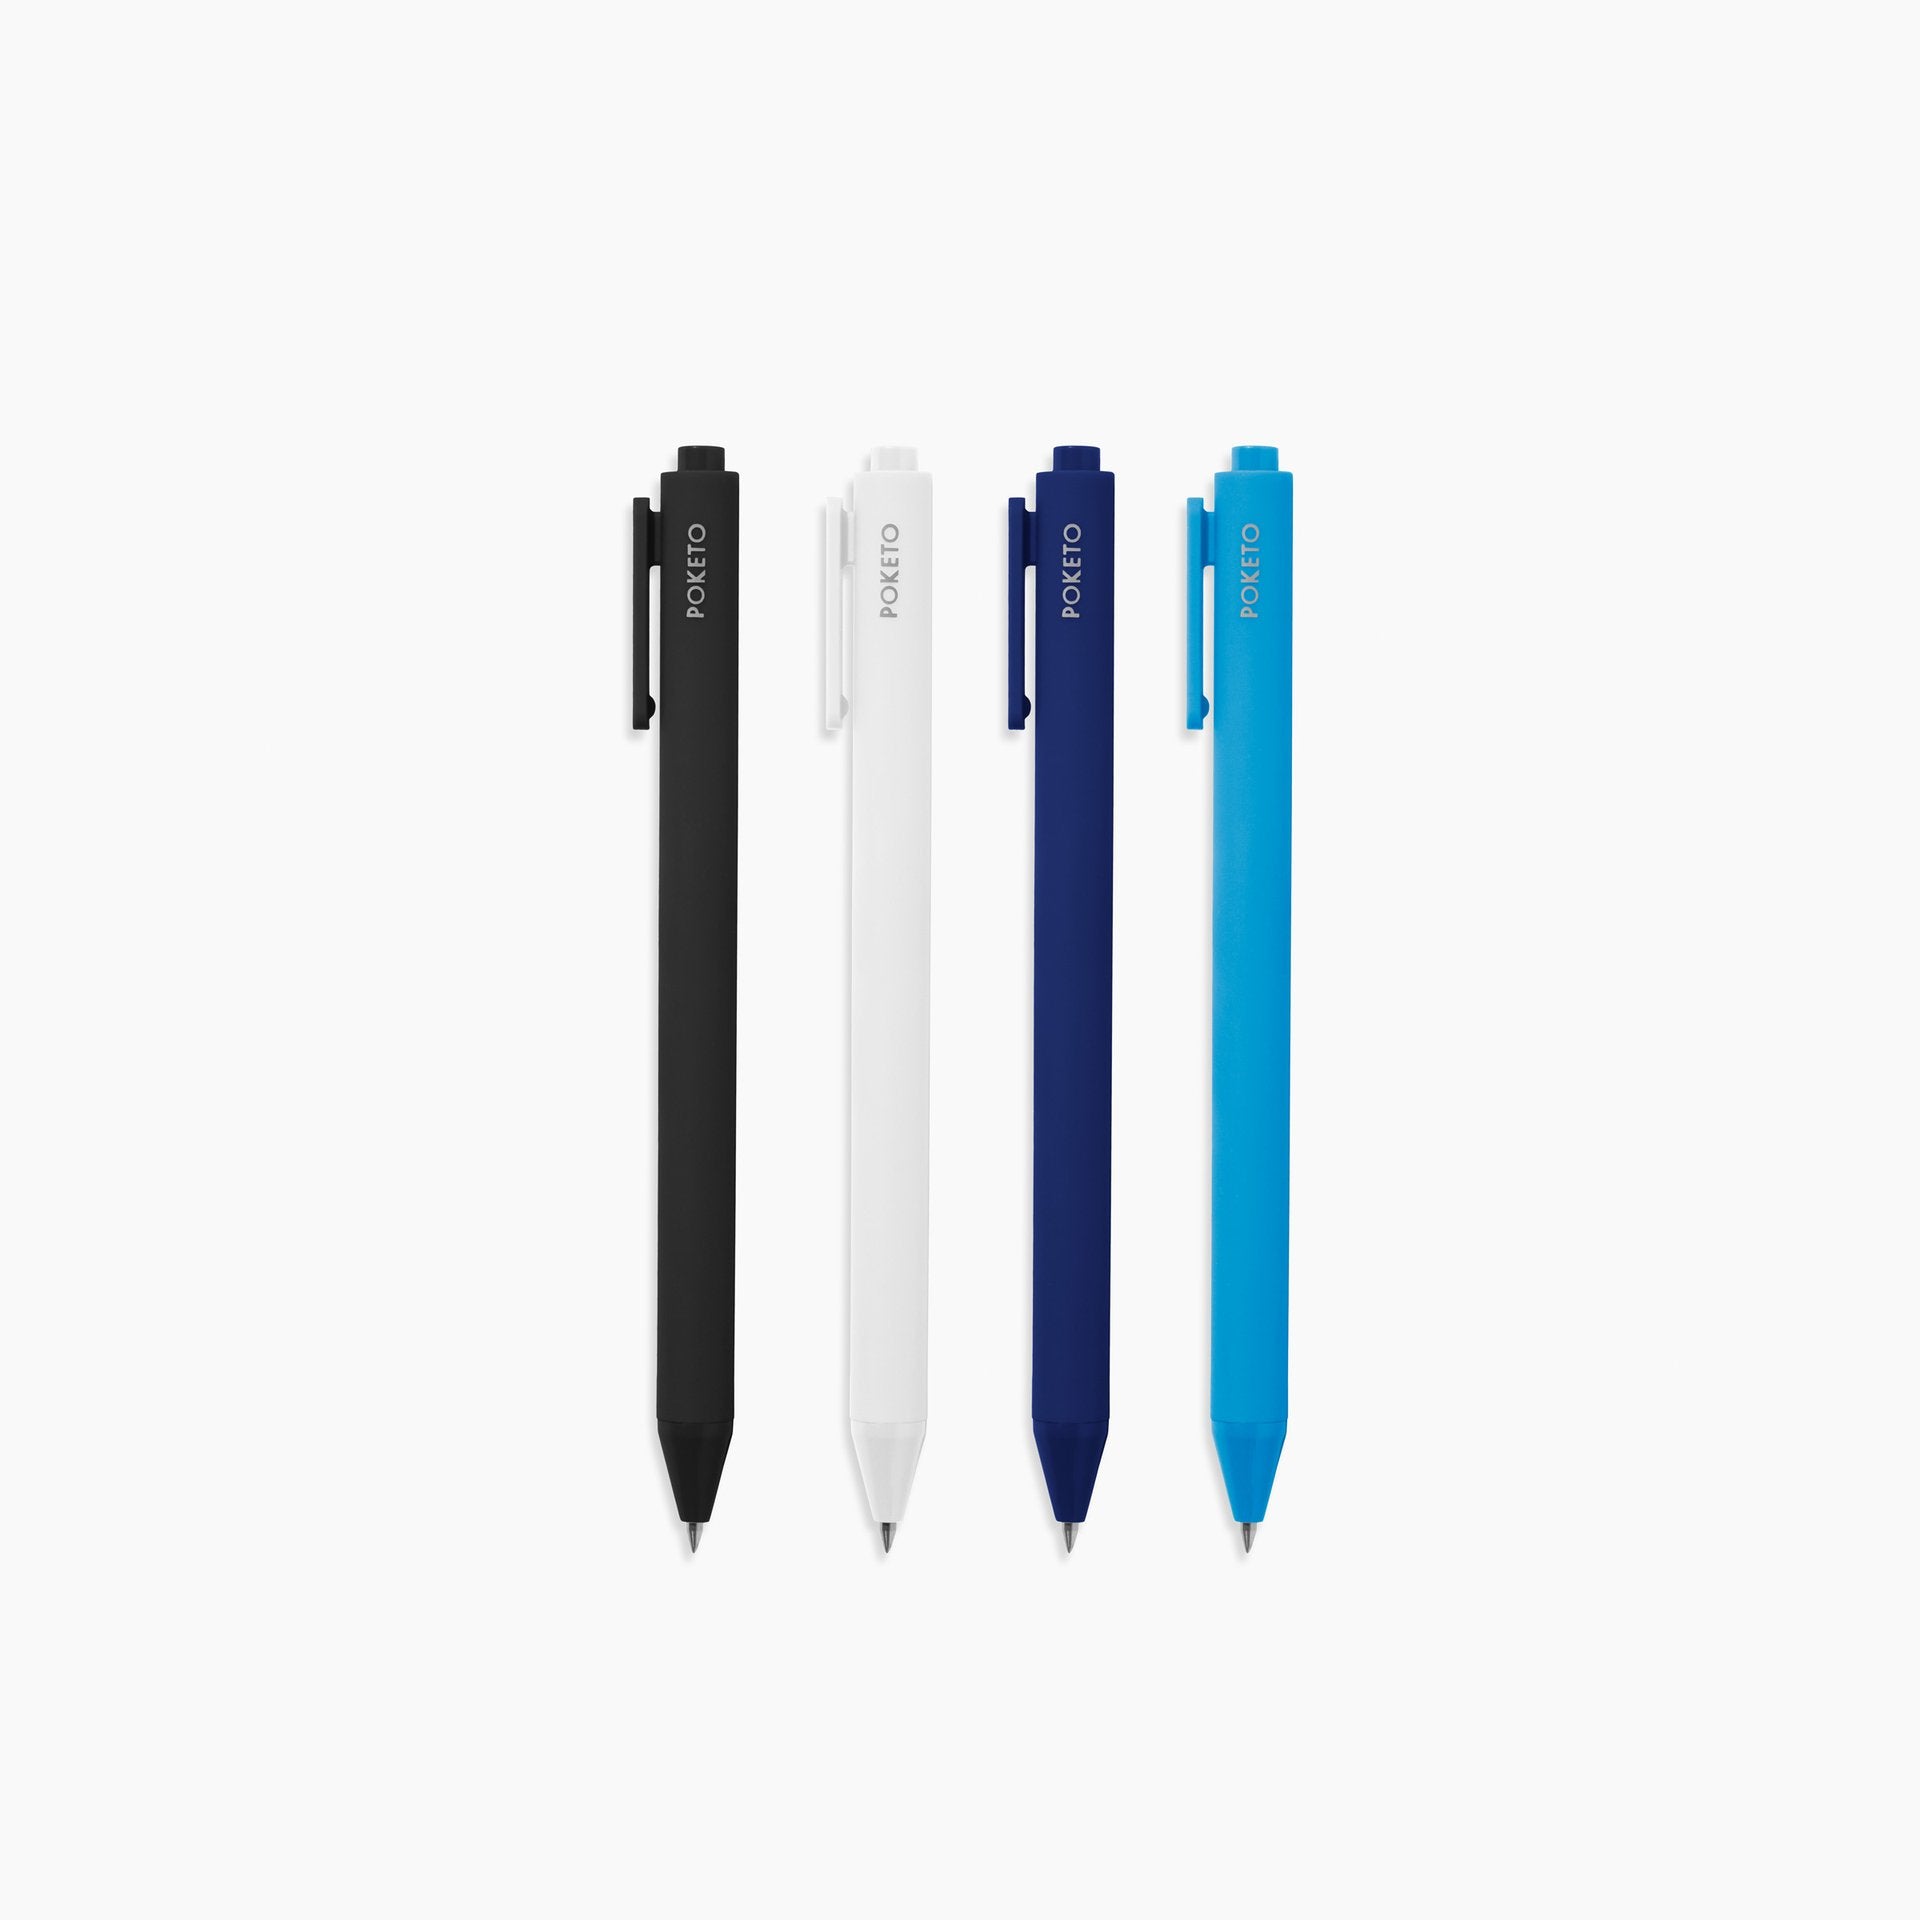 Poketo Vivid Gel Pen - Set of 4 Cool